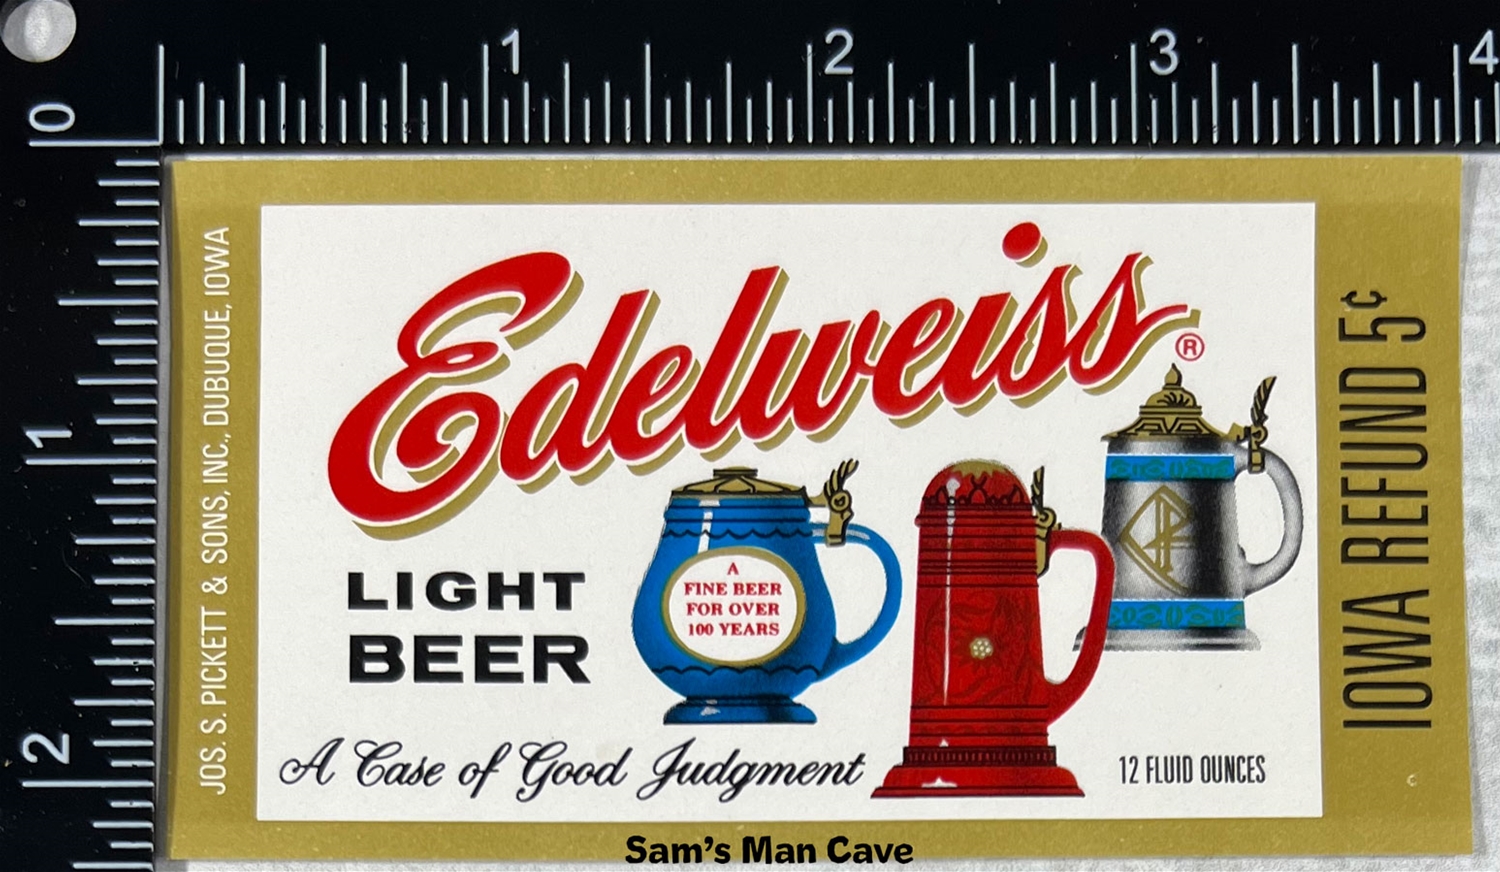 Edelweiss Light Beer Label